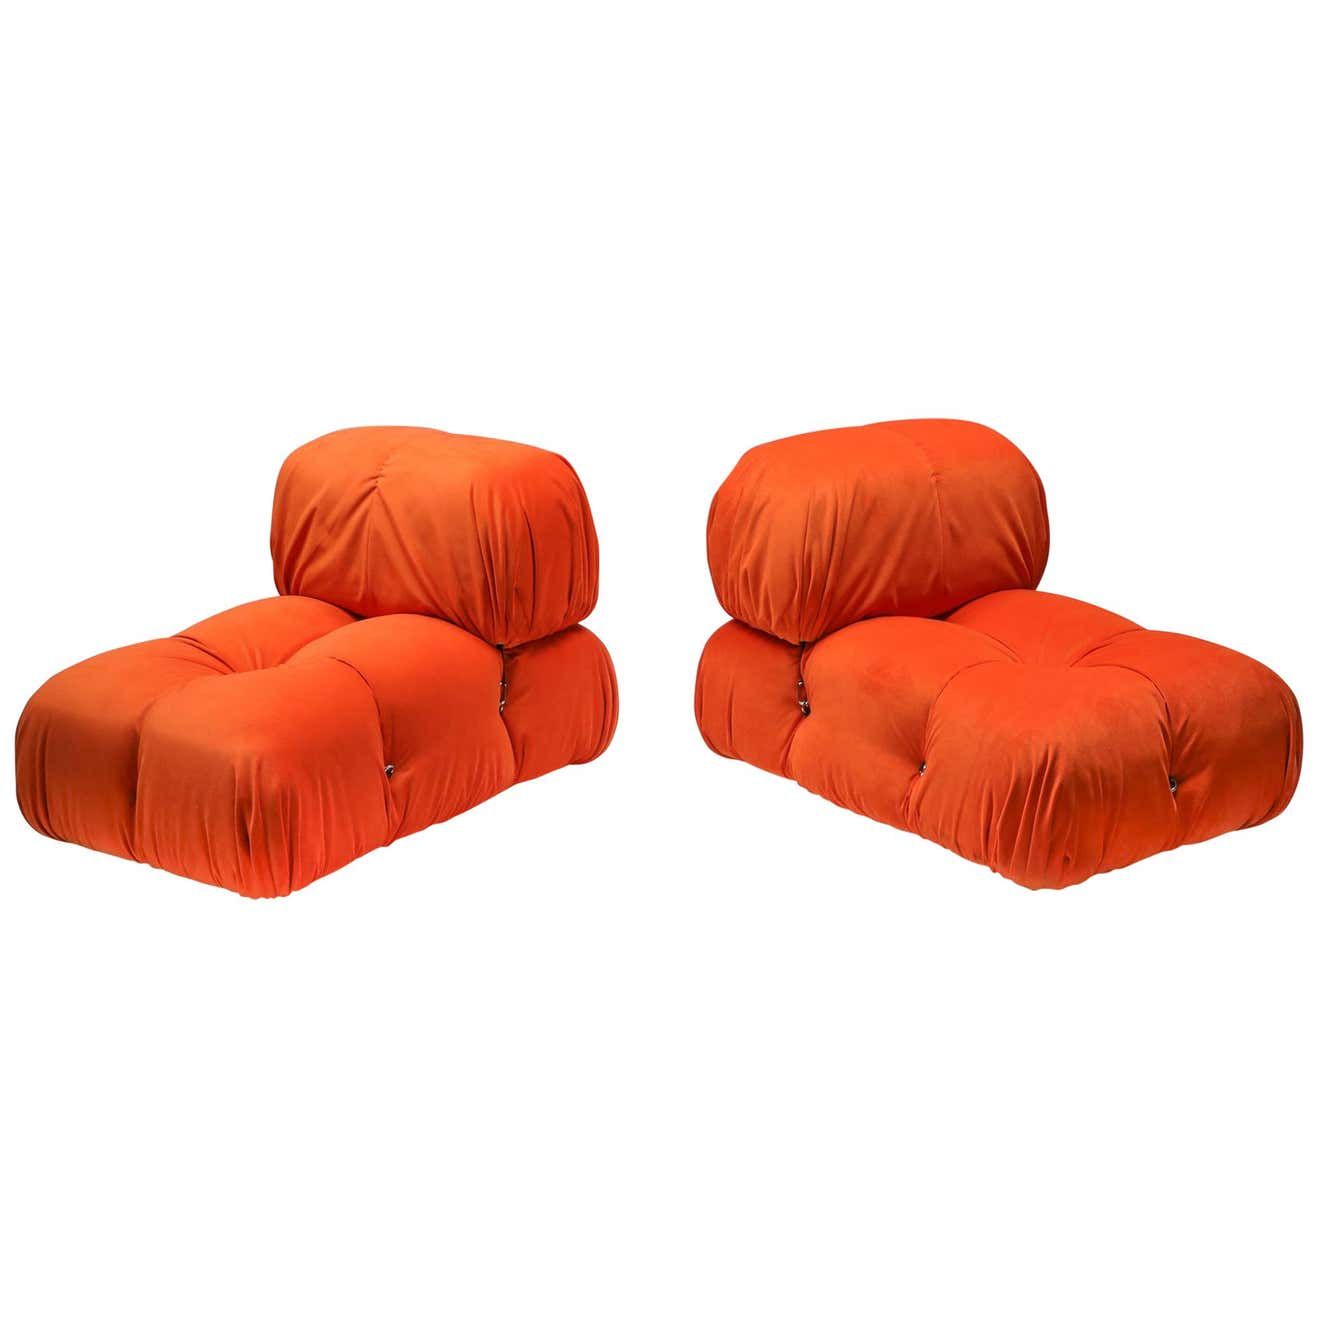 Orange Camaleonda Chairs 